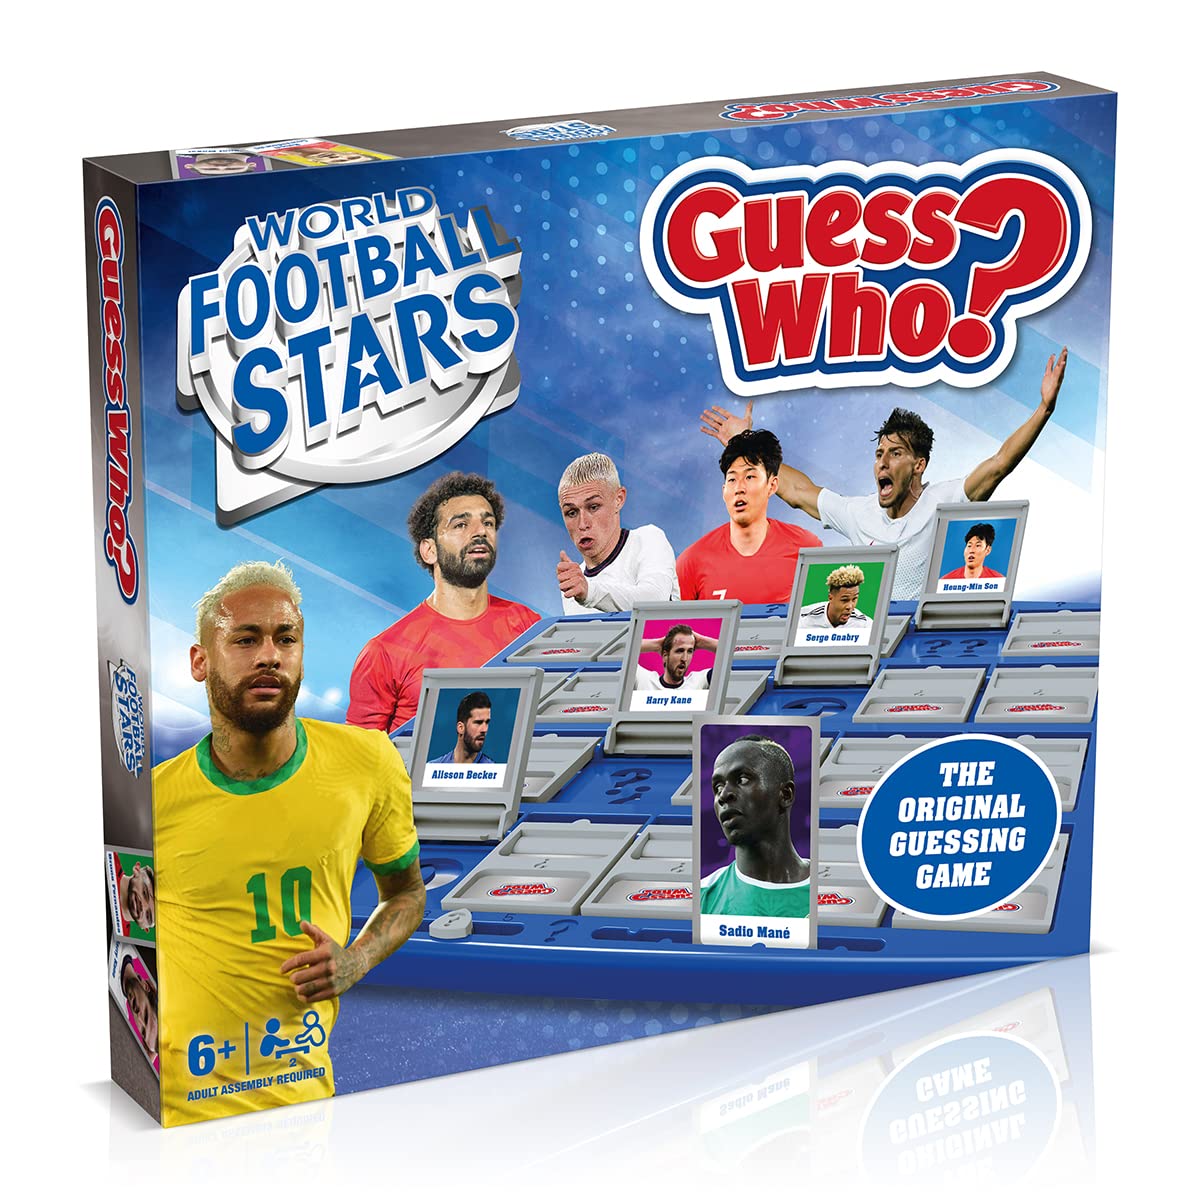 Winning Moves WM02282-EN1-6 World Football Stars Guess Who Board Game